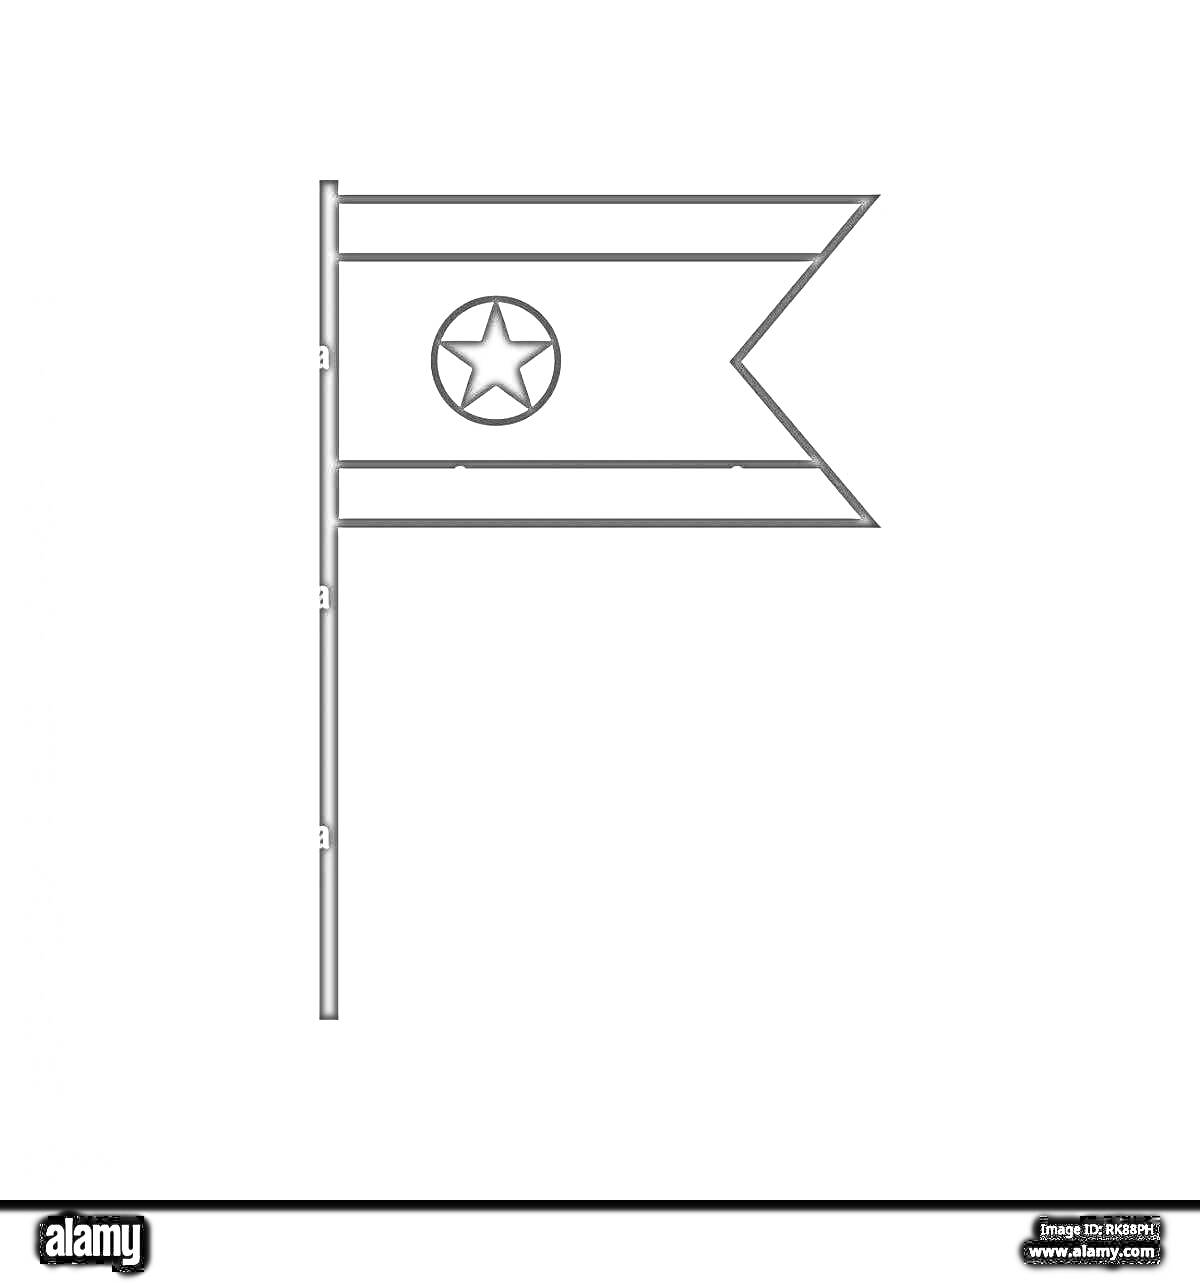 Раскраска раскраска флаг Кореи с звездой и флагштоком